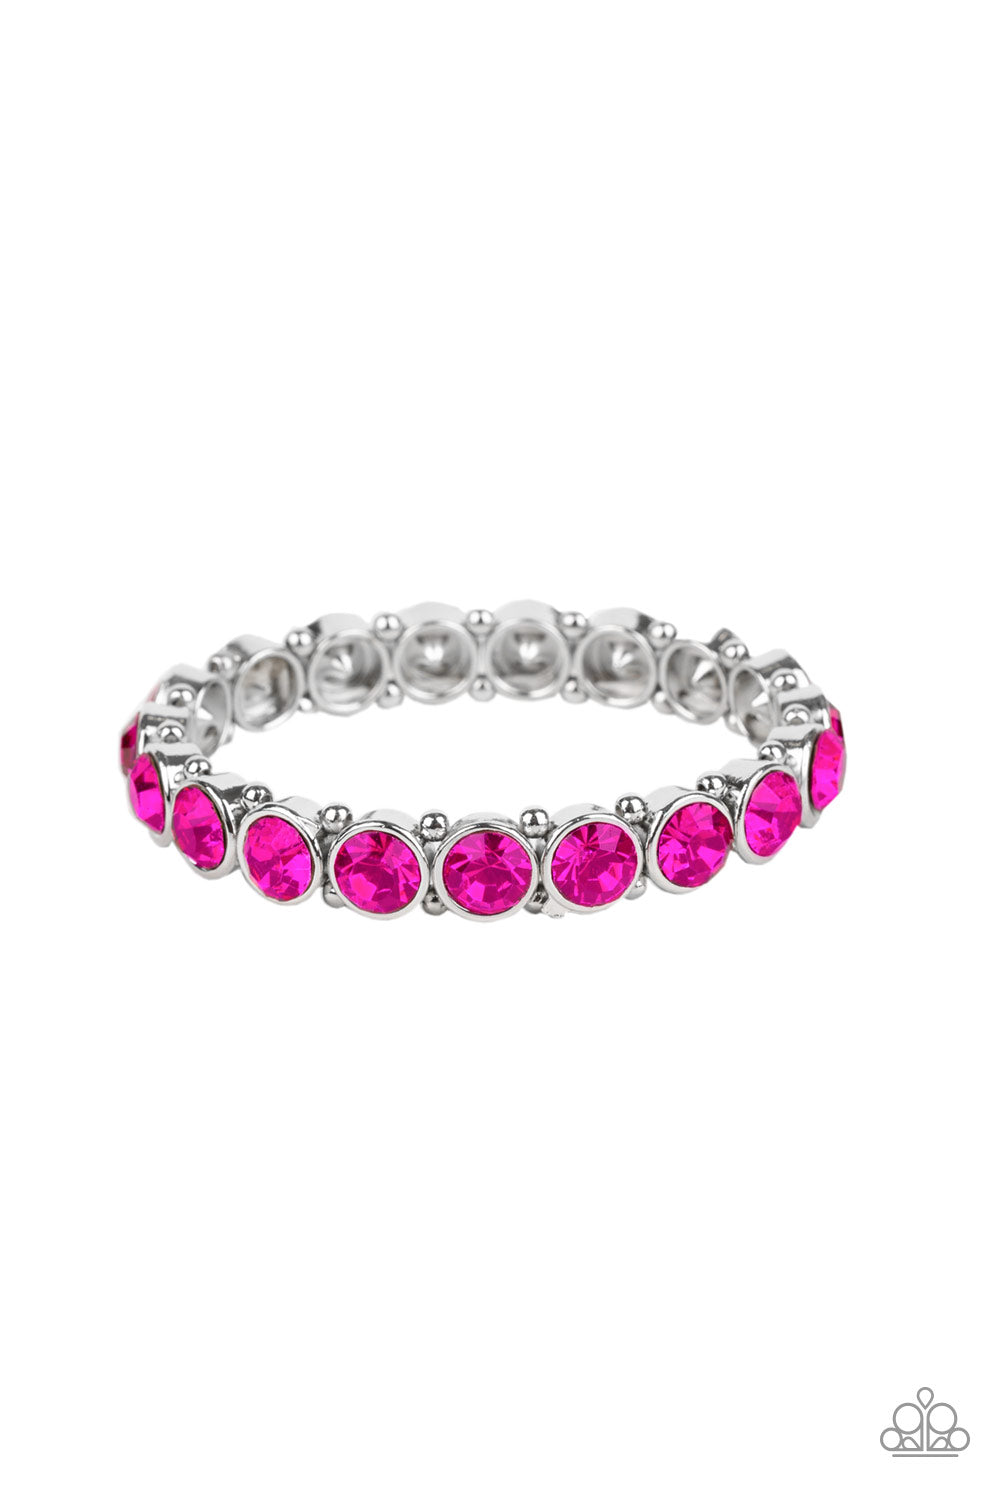 Paparazzi Accessories - Sugar-Coated Sparkle - Pink & Silver Bracelet